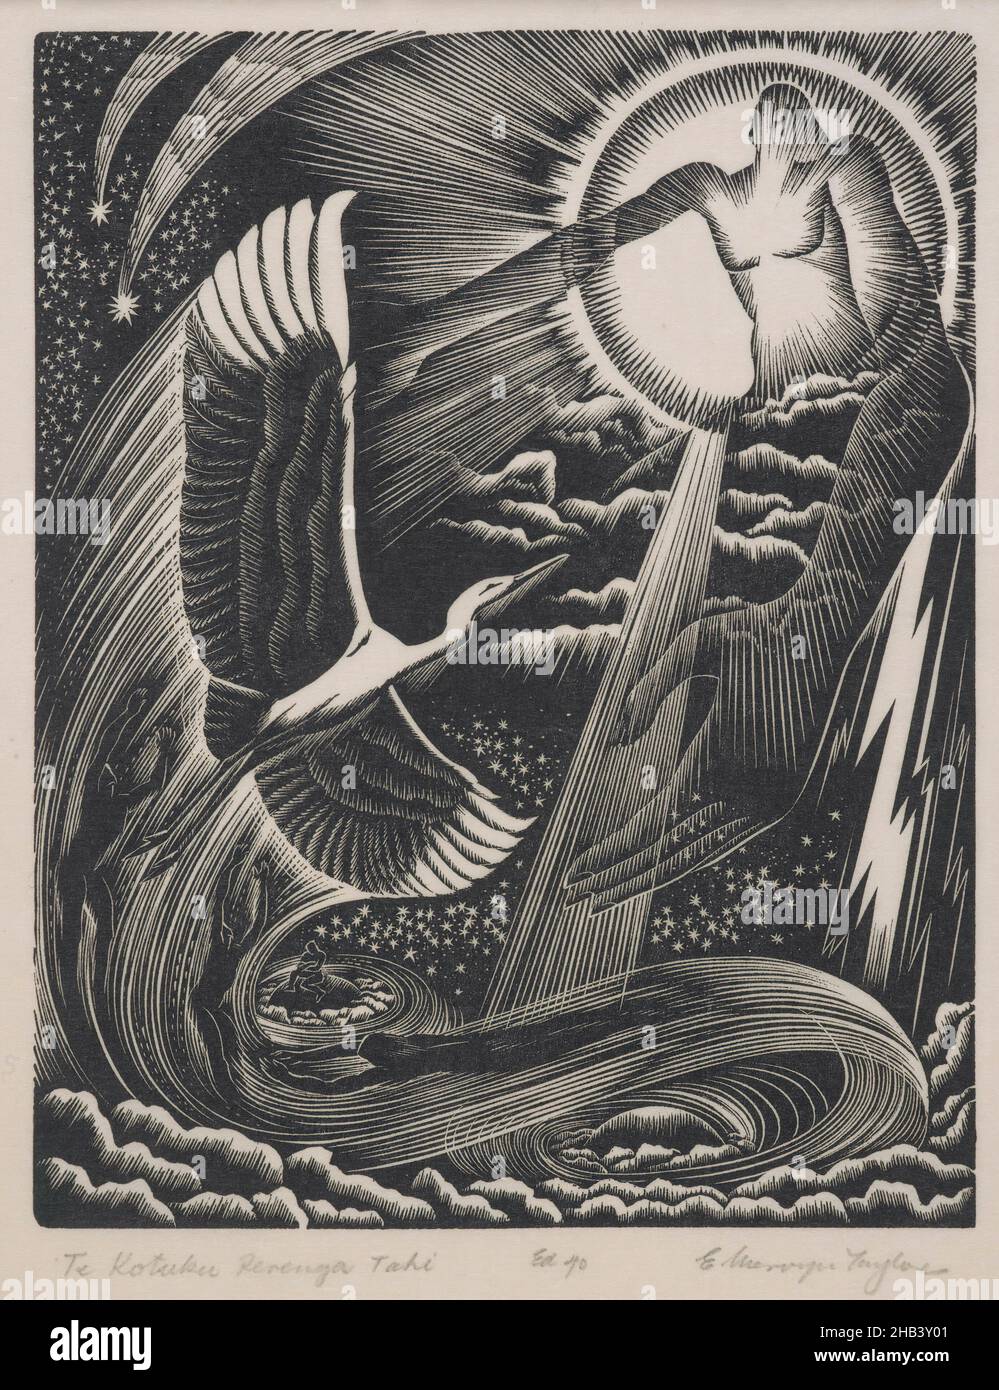 Te kotuku rerenga tahi (The heron of single flight), E Mervyn Taylor, artist, 1953, Wellington, wood engraving Stock Photo